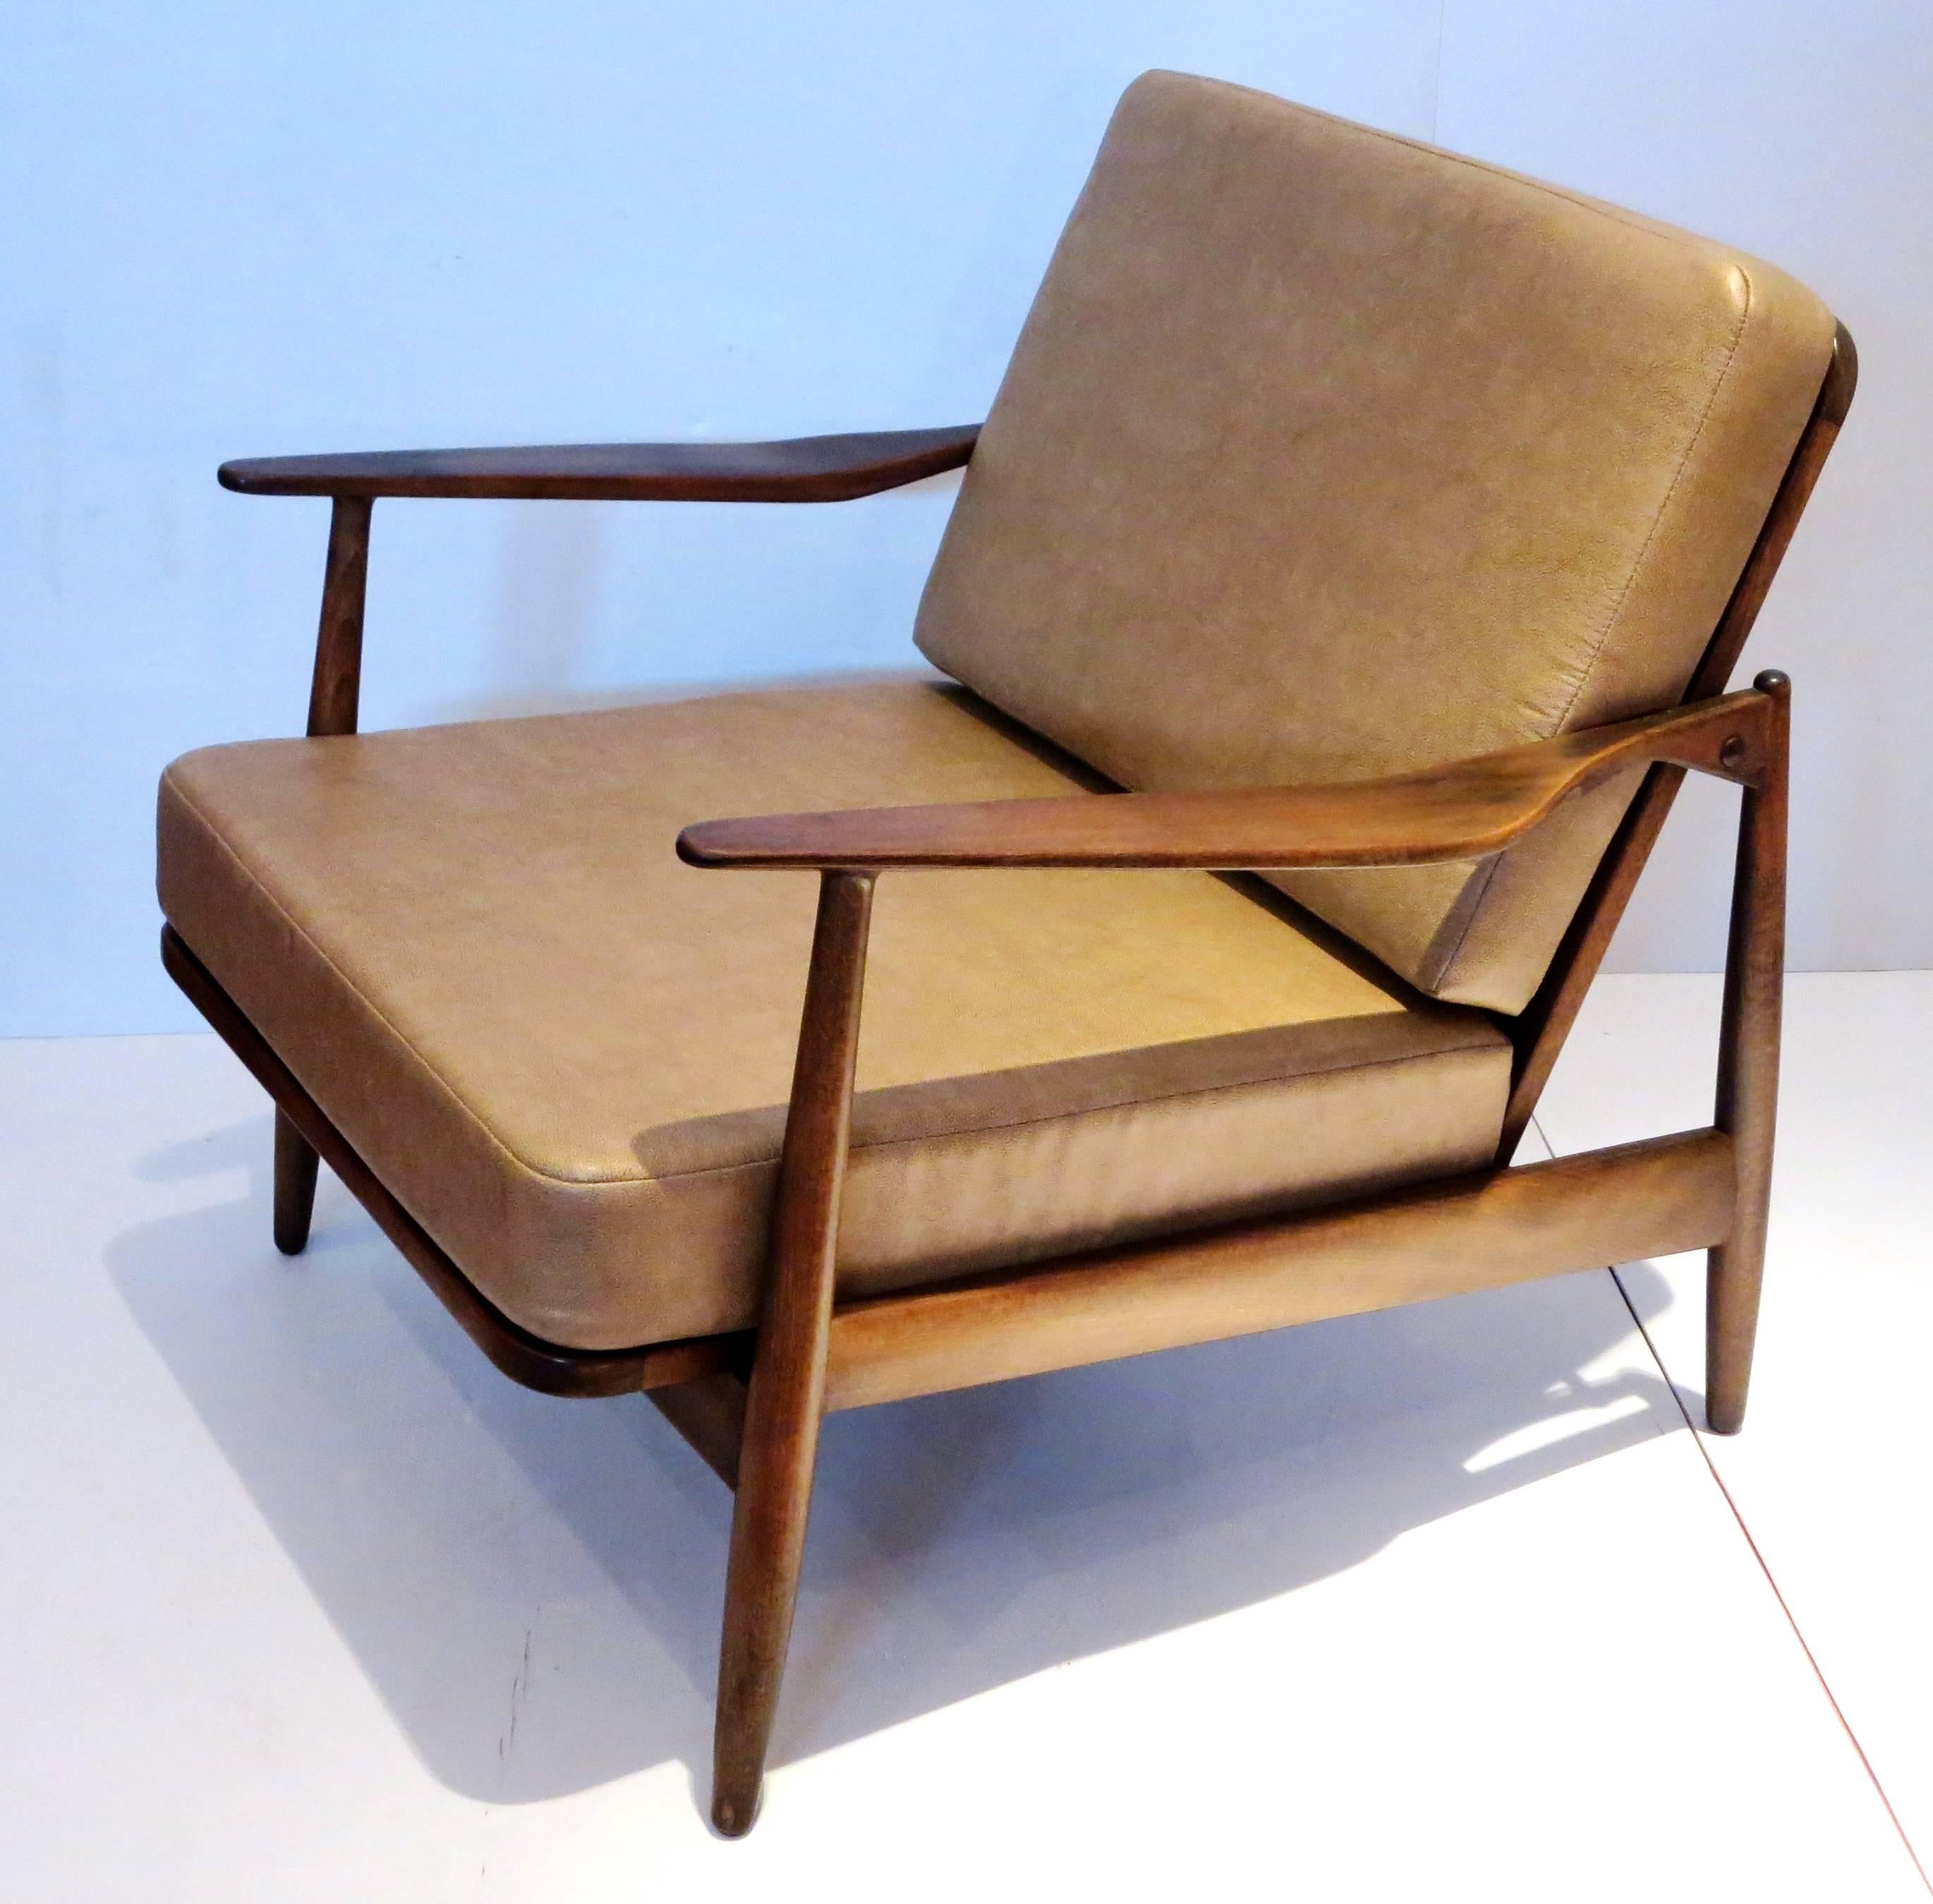 Pair of 1950s Danish modern walnut finish club chairs by Scandia 1